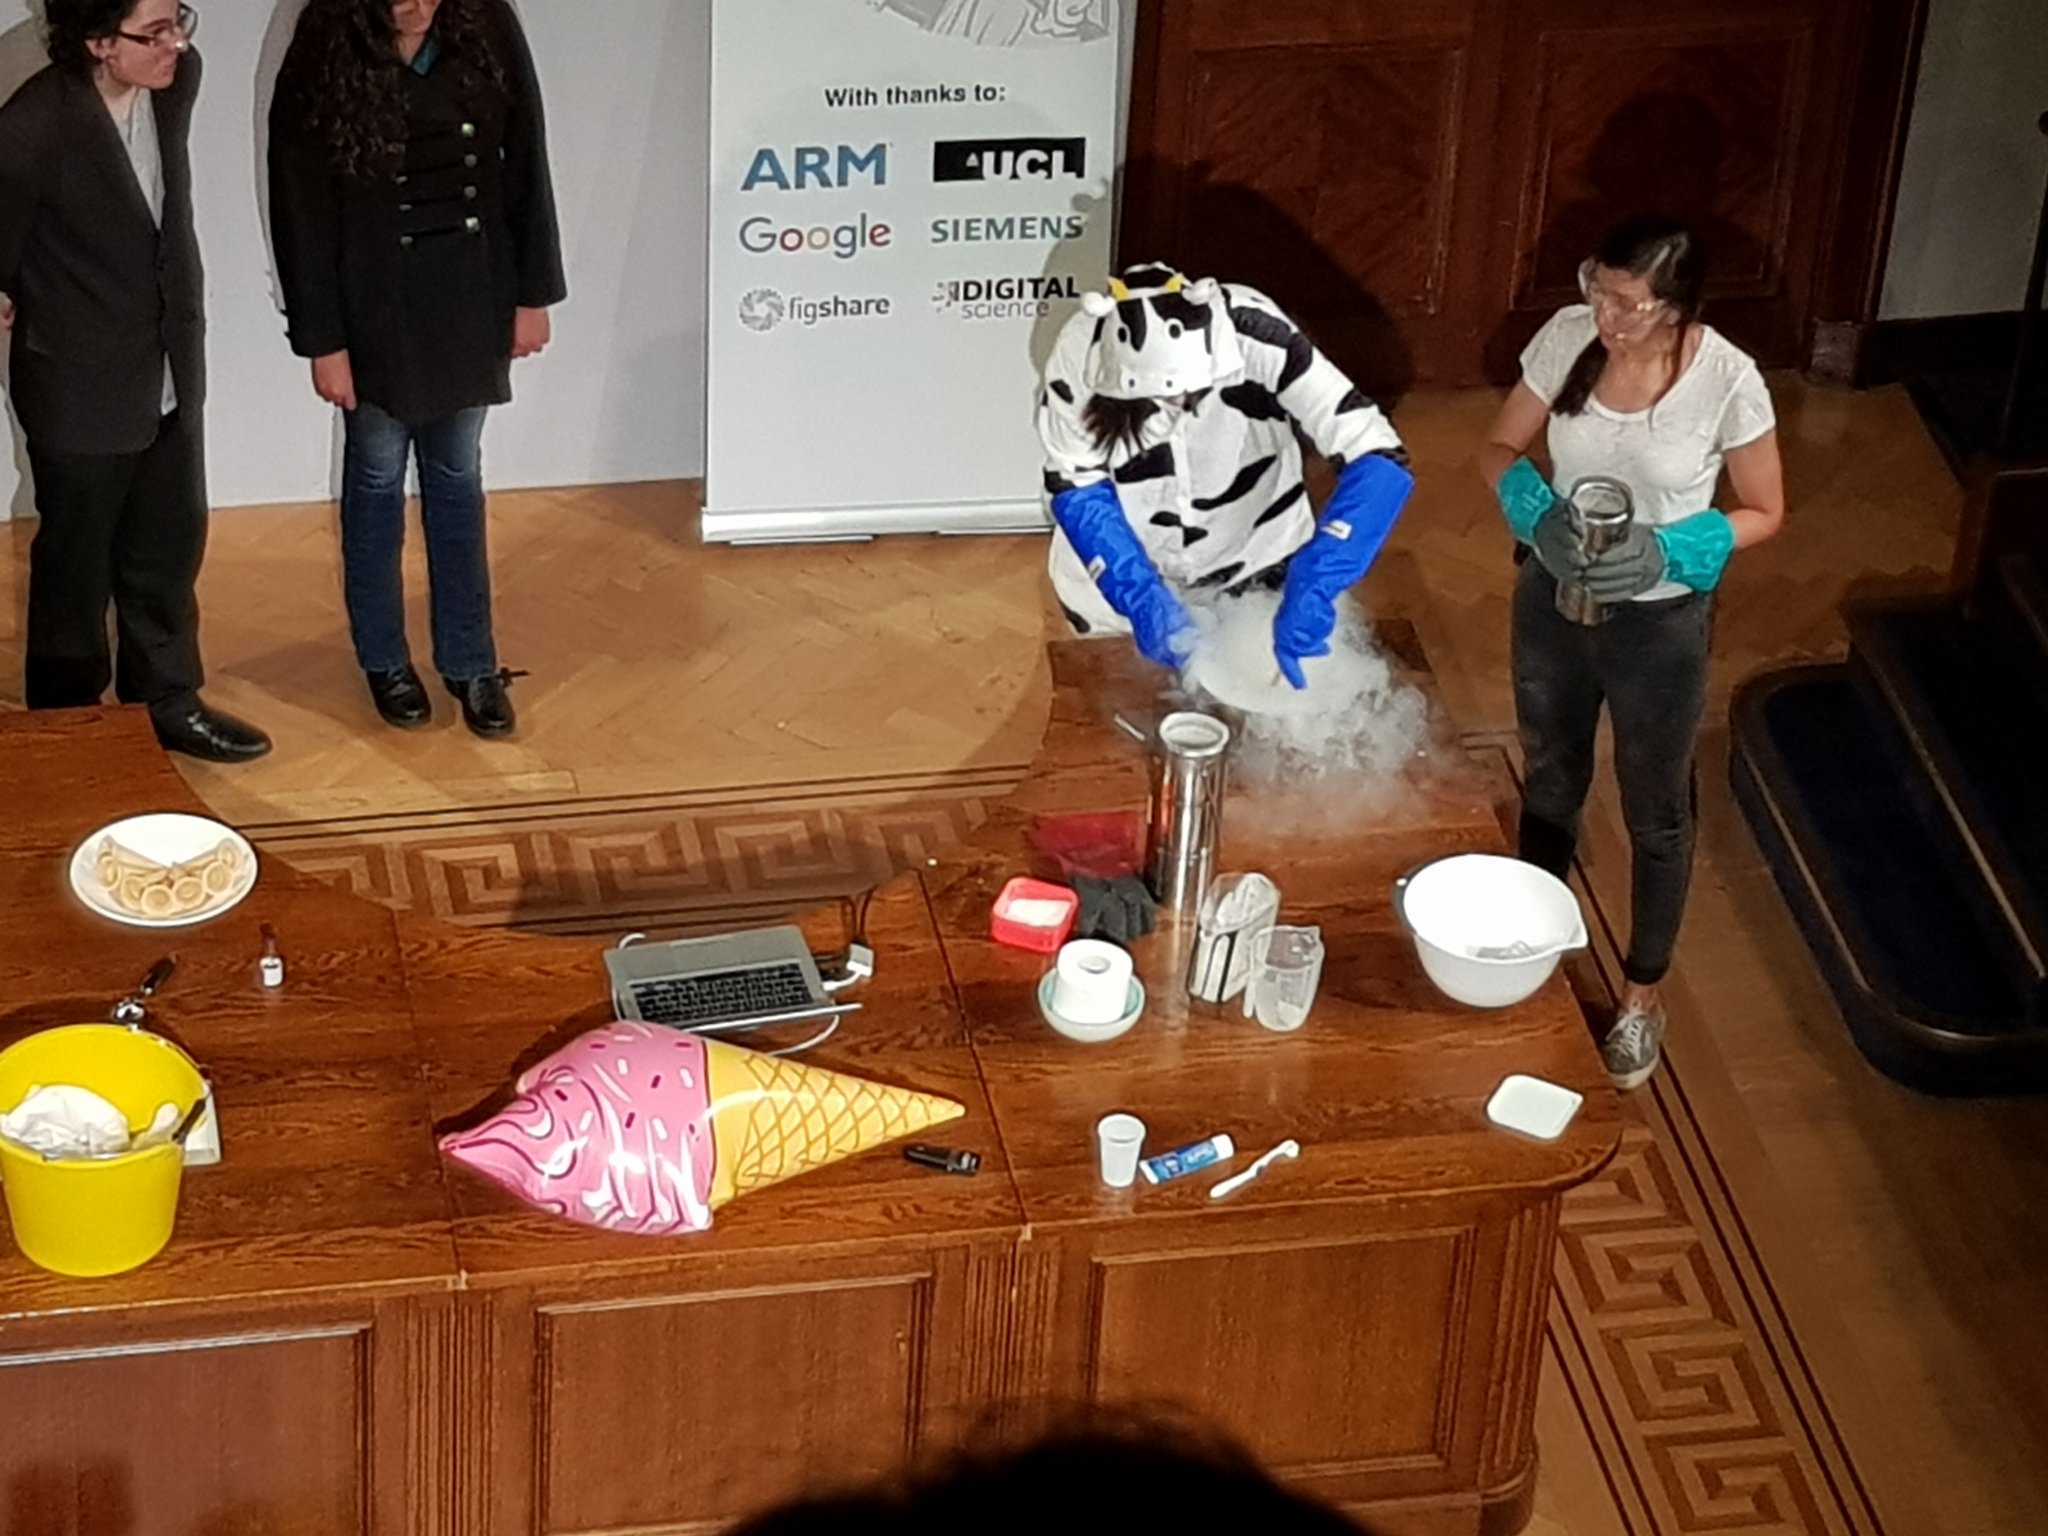 A woman dressed as a cow making ice cream with liquid nitrogen #ald17 https://t.co/djBaMvRzro